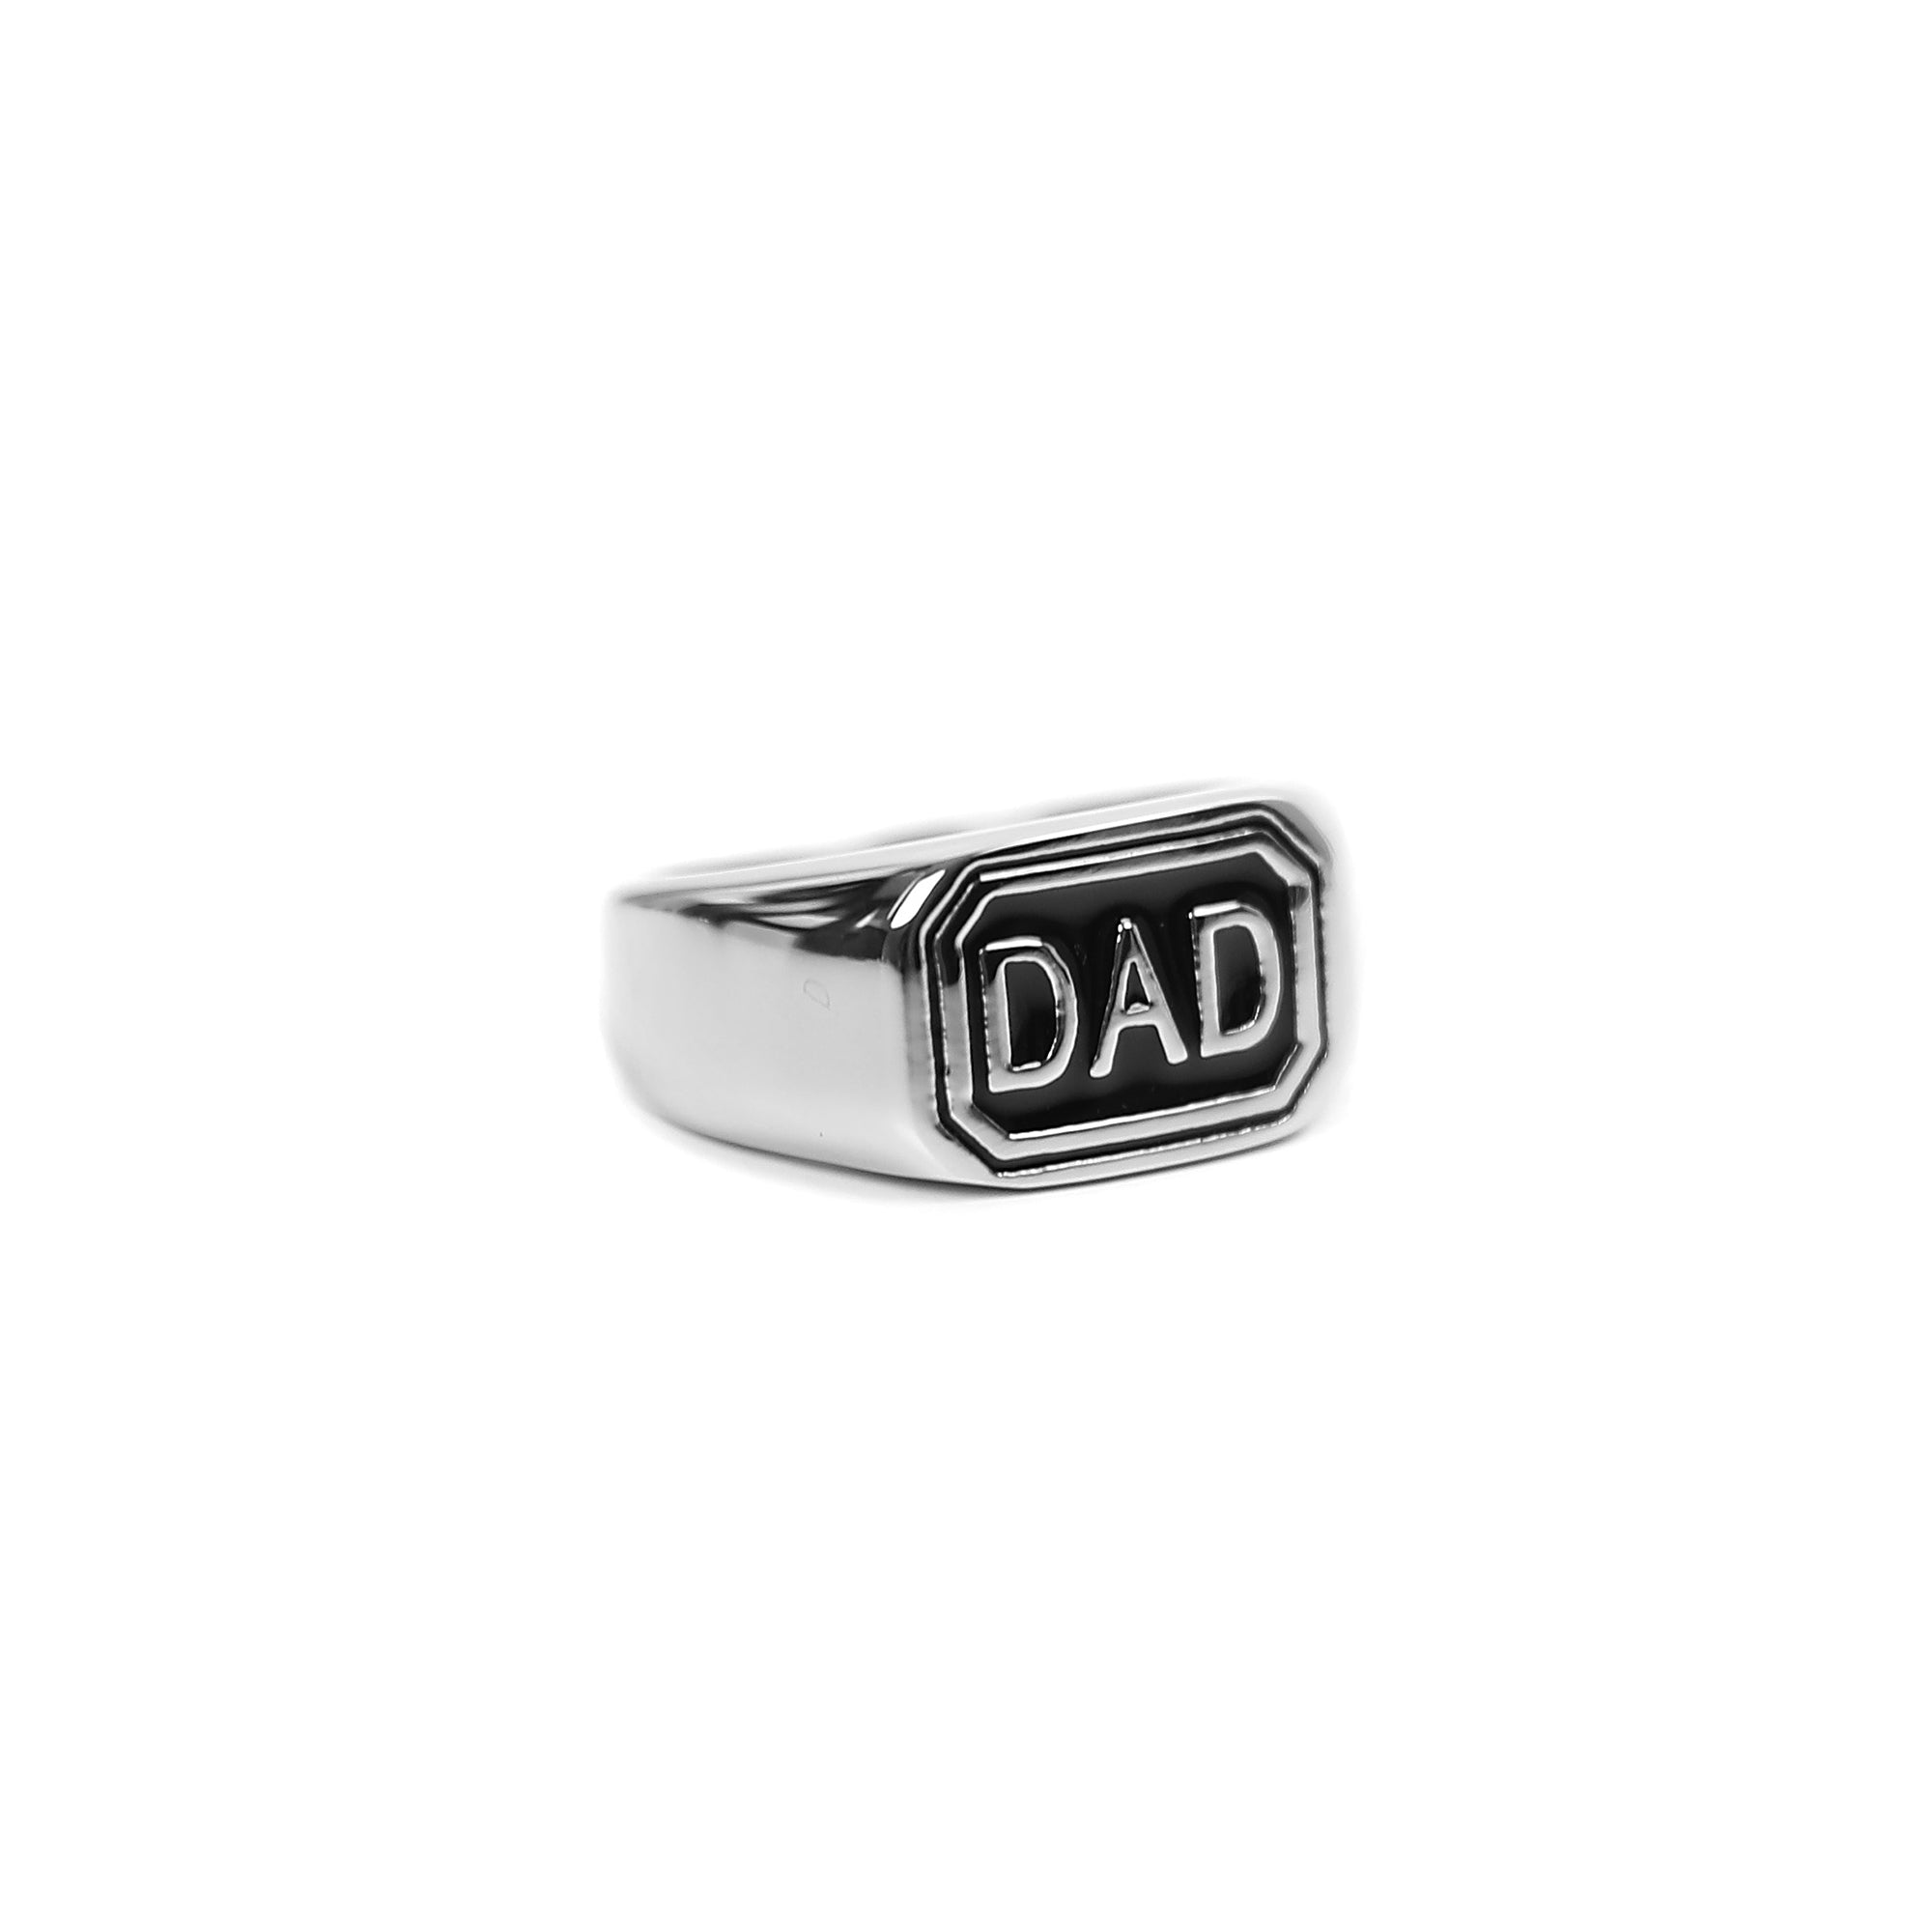 Dad Ring - Silver